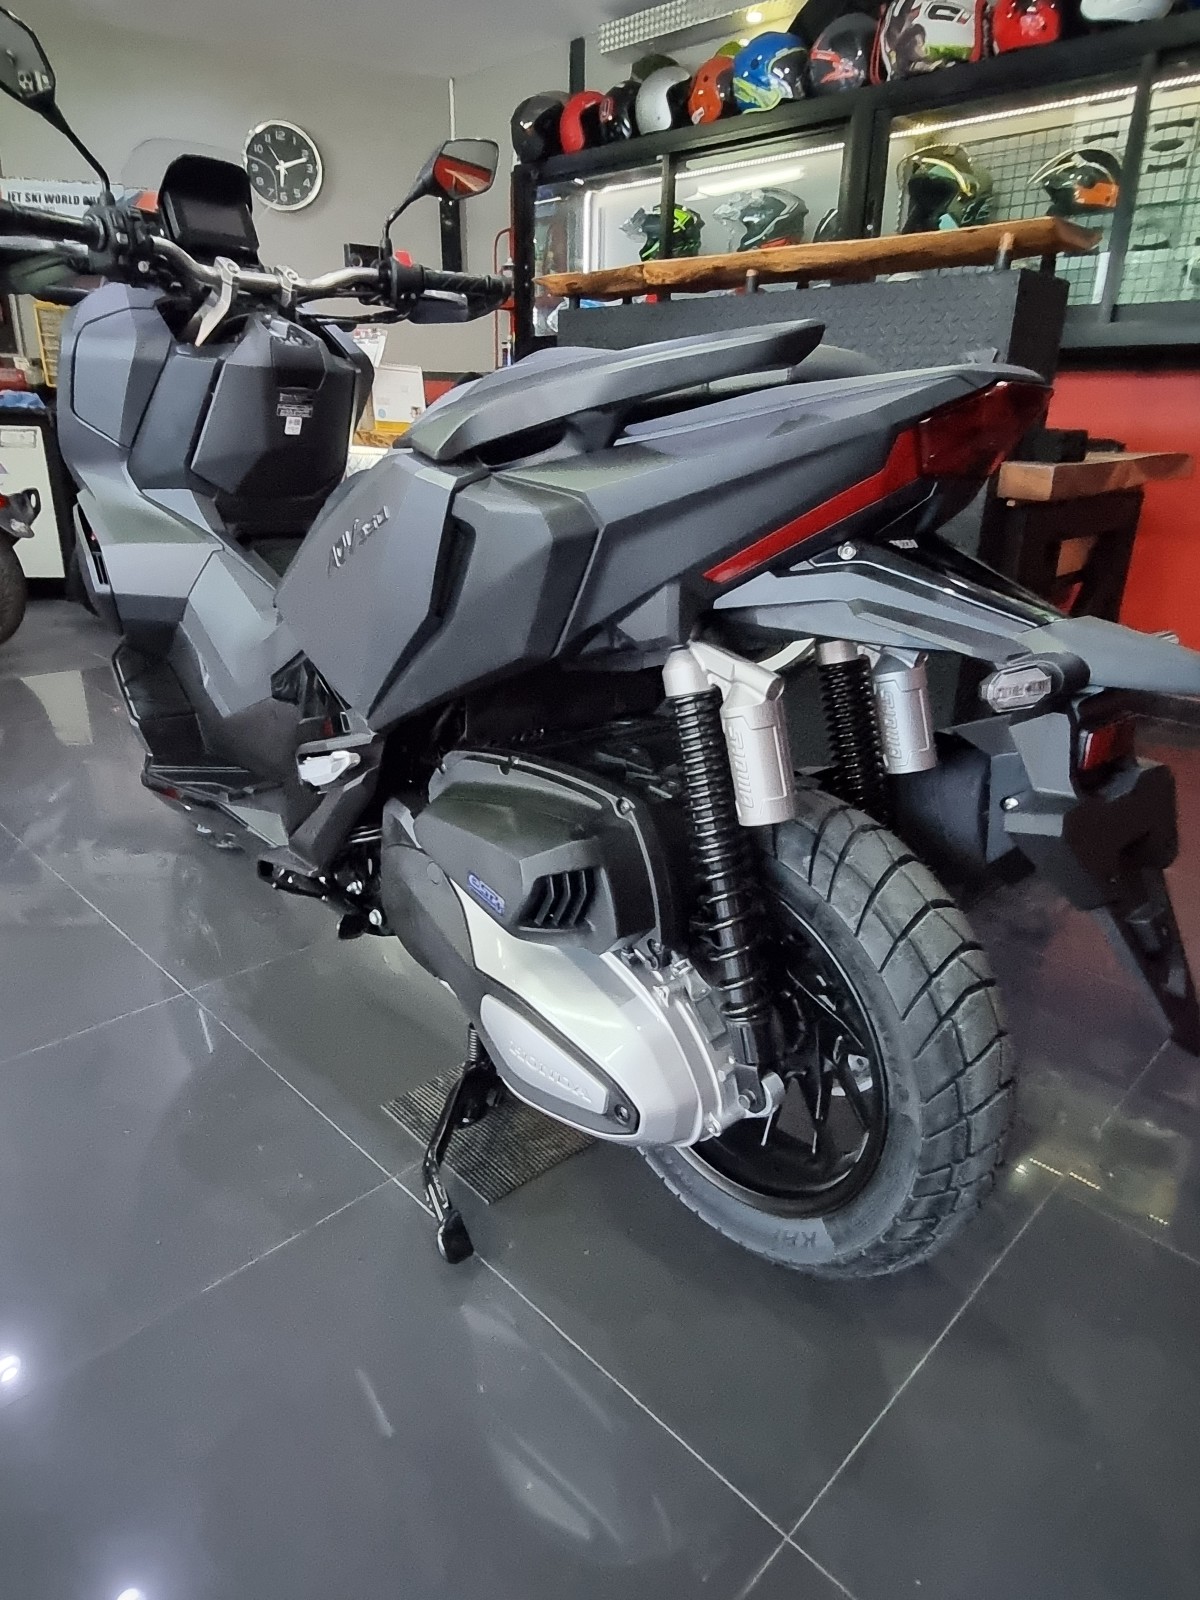 Hire motorcycle Pattaya